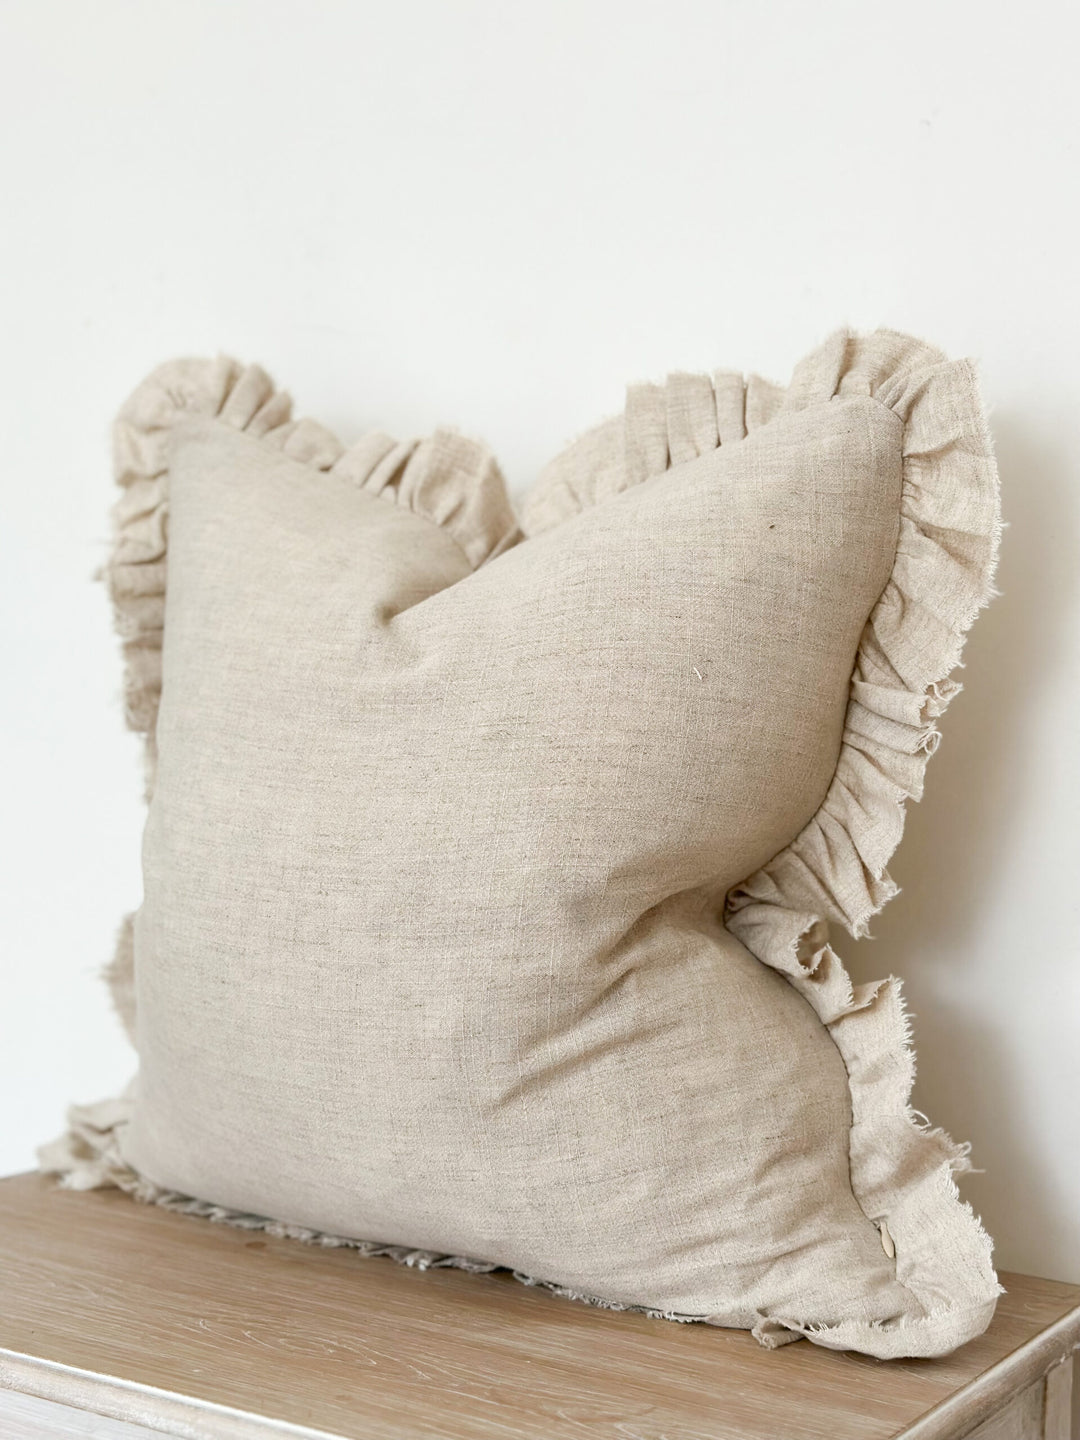 Ruffled Linen cushion cover 45cm×45cm – Sand